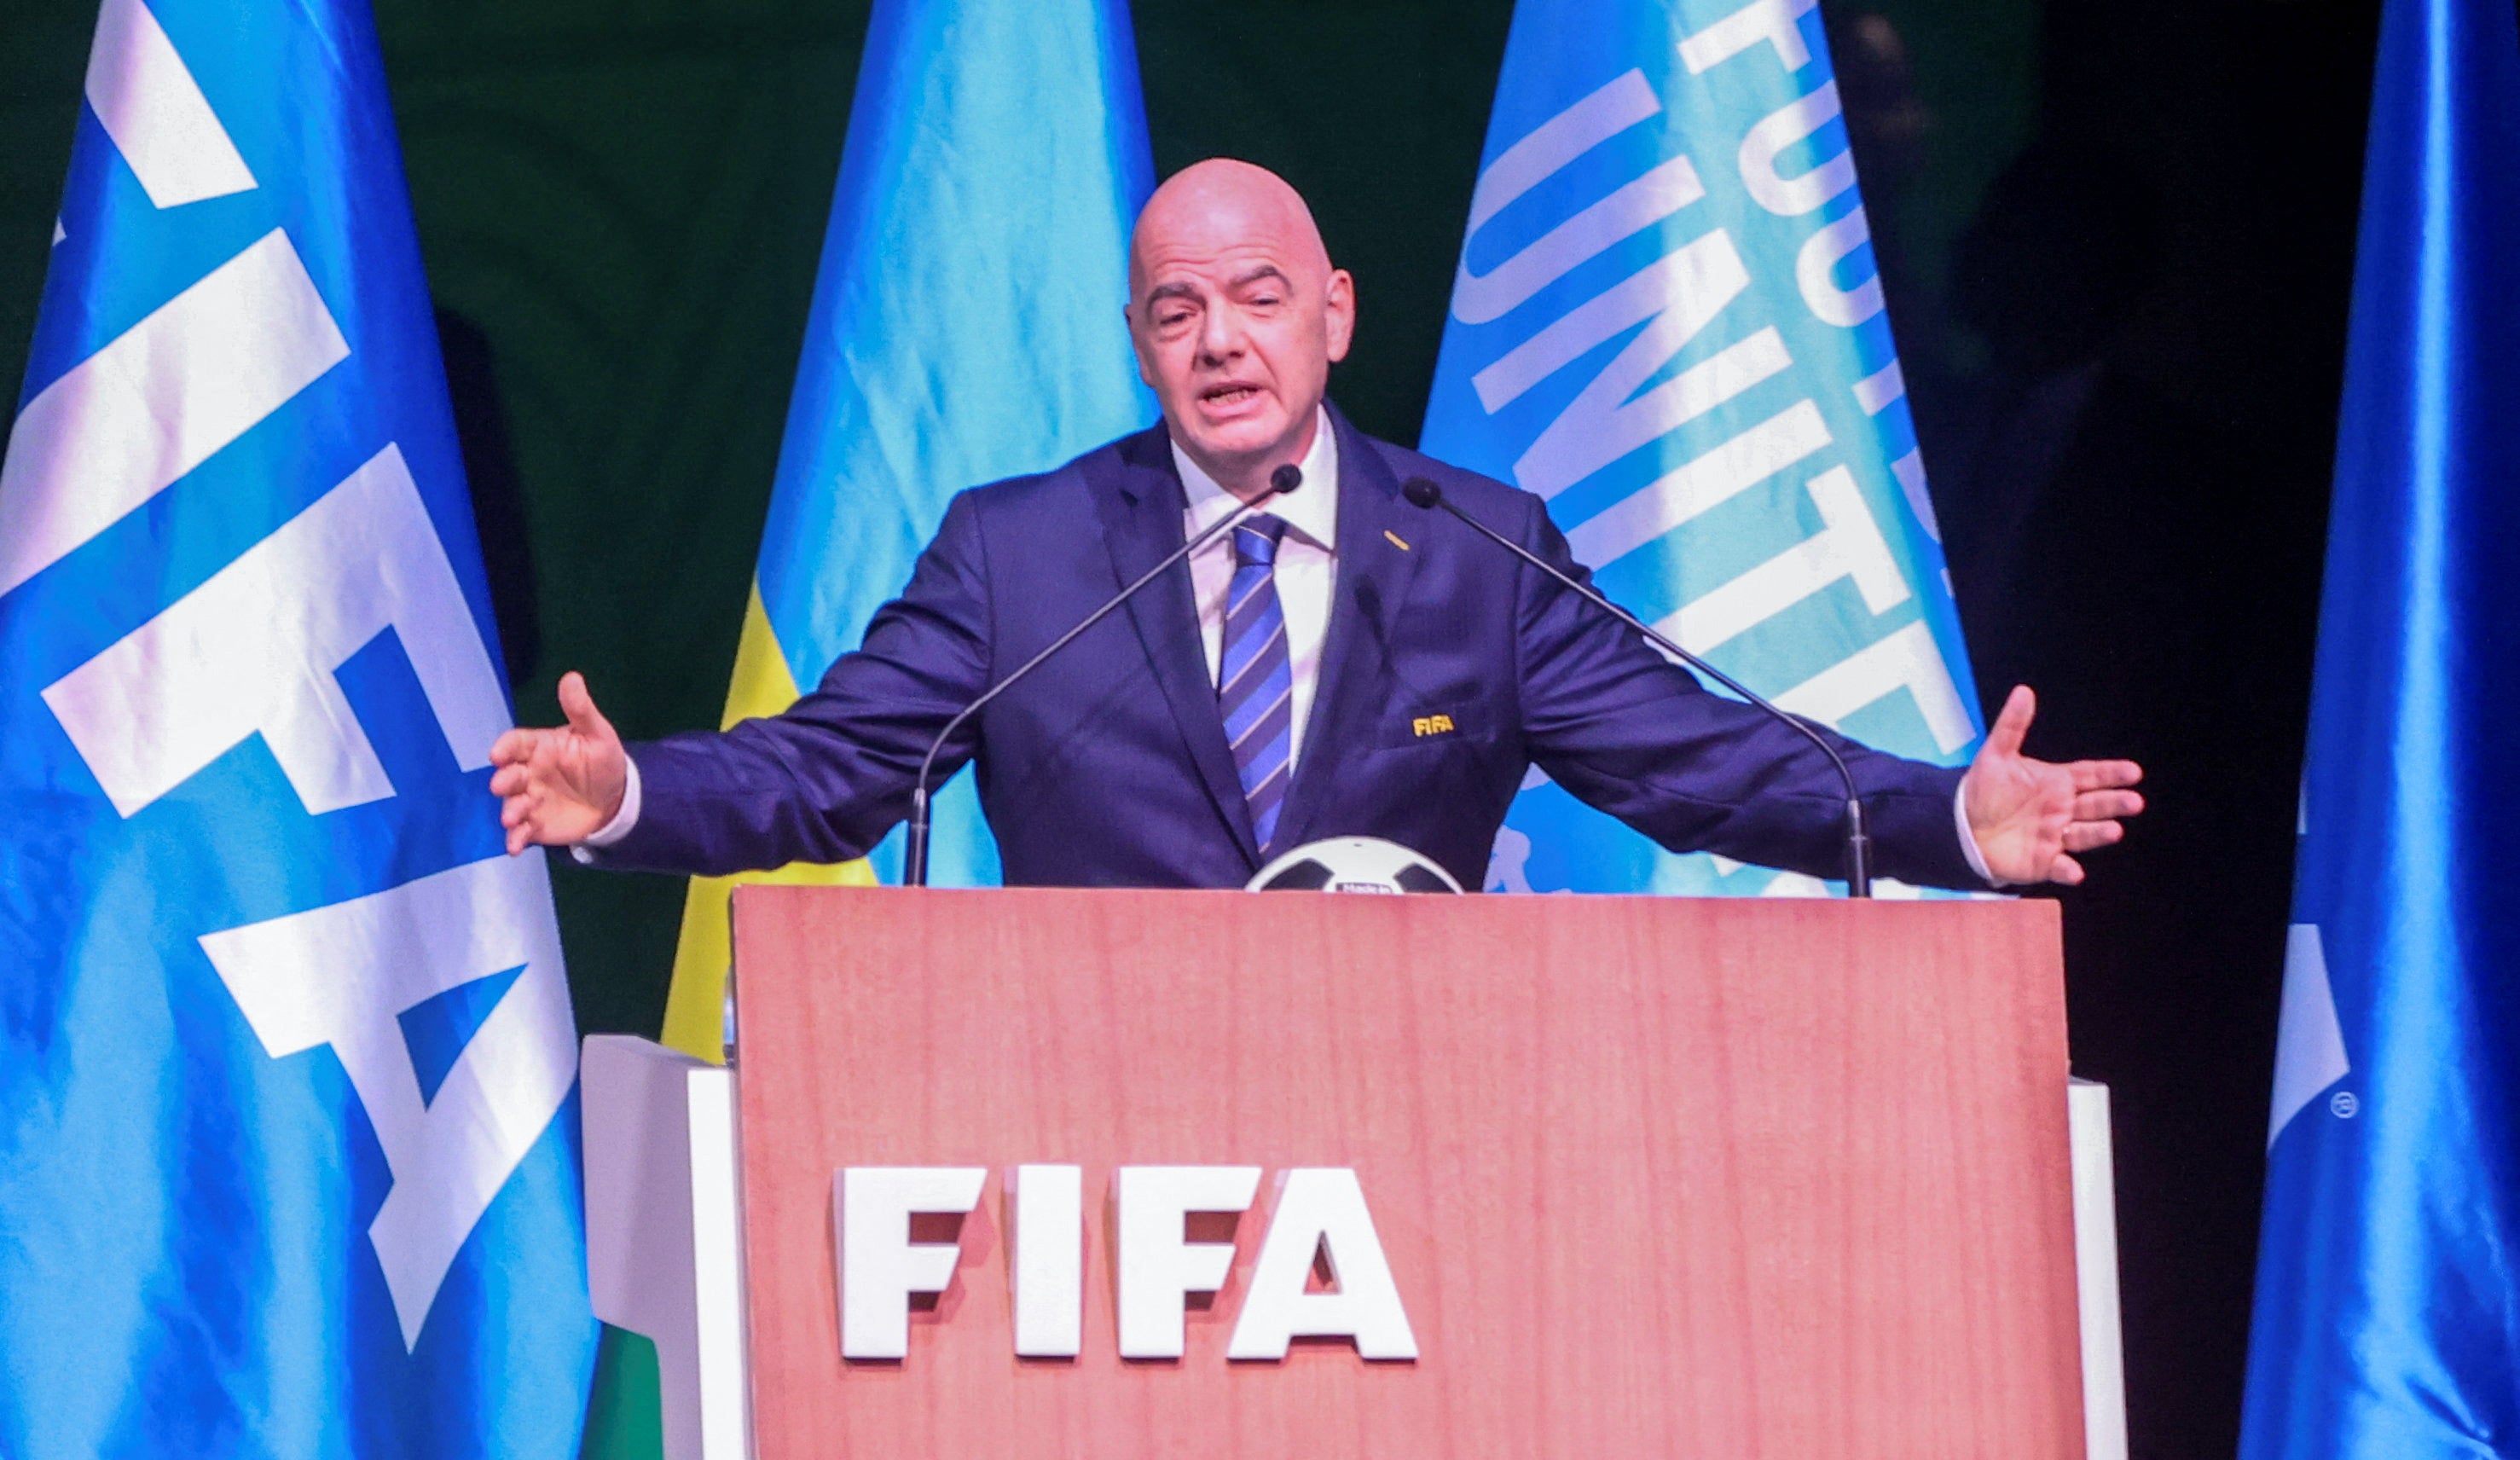 Gianni Infantino addresses the 73rd Fifa Congress in Kigali, Rwanda